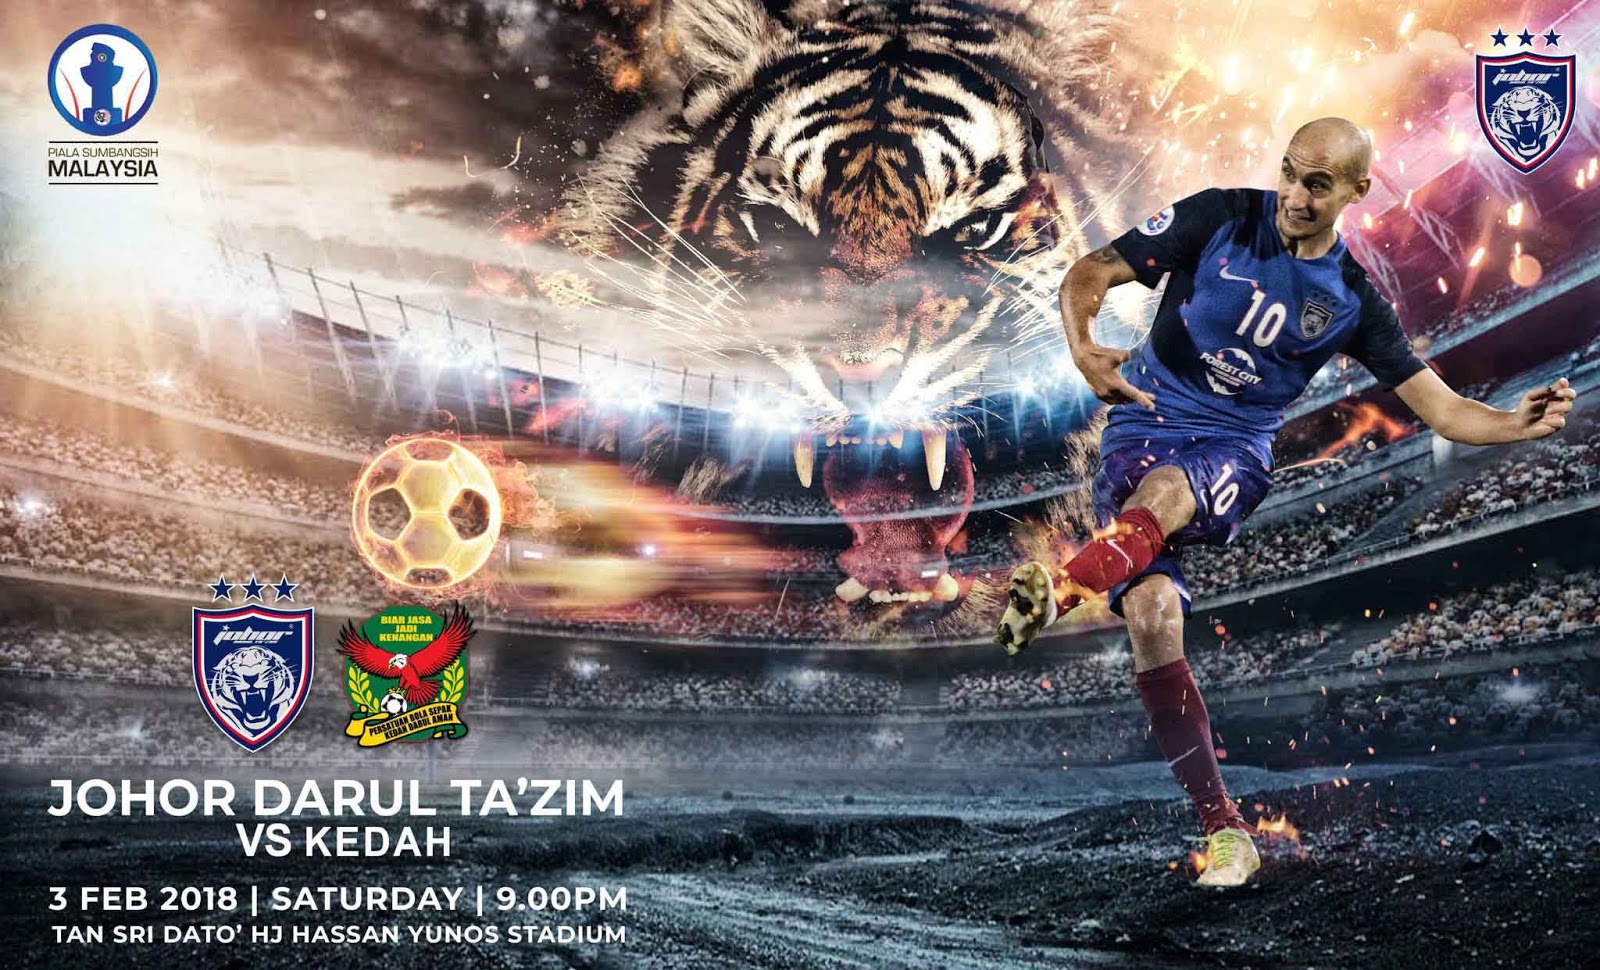 Live Streaming Jdt Vs Kedah Piala Sumbangsih Online 3 2 2018